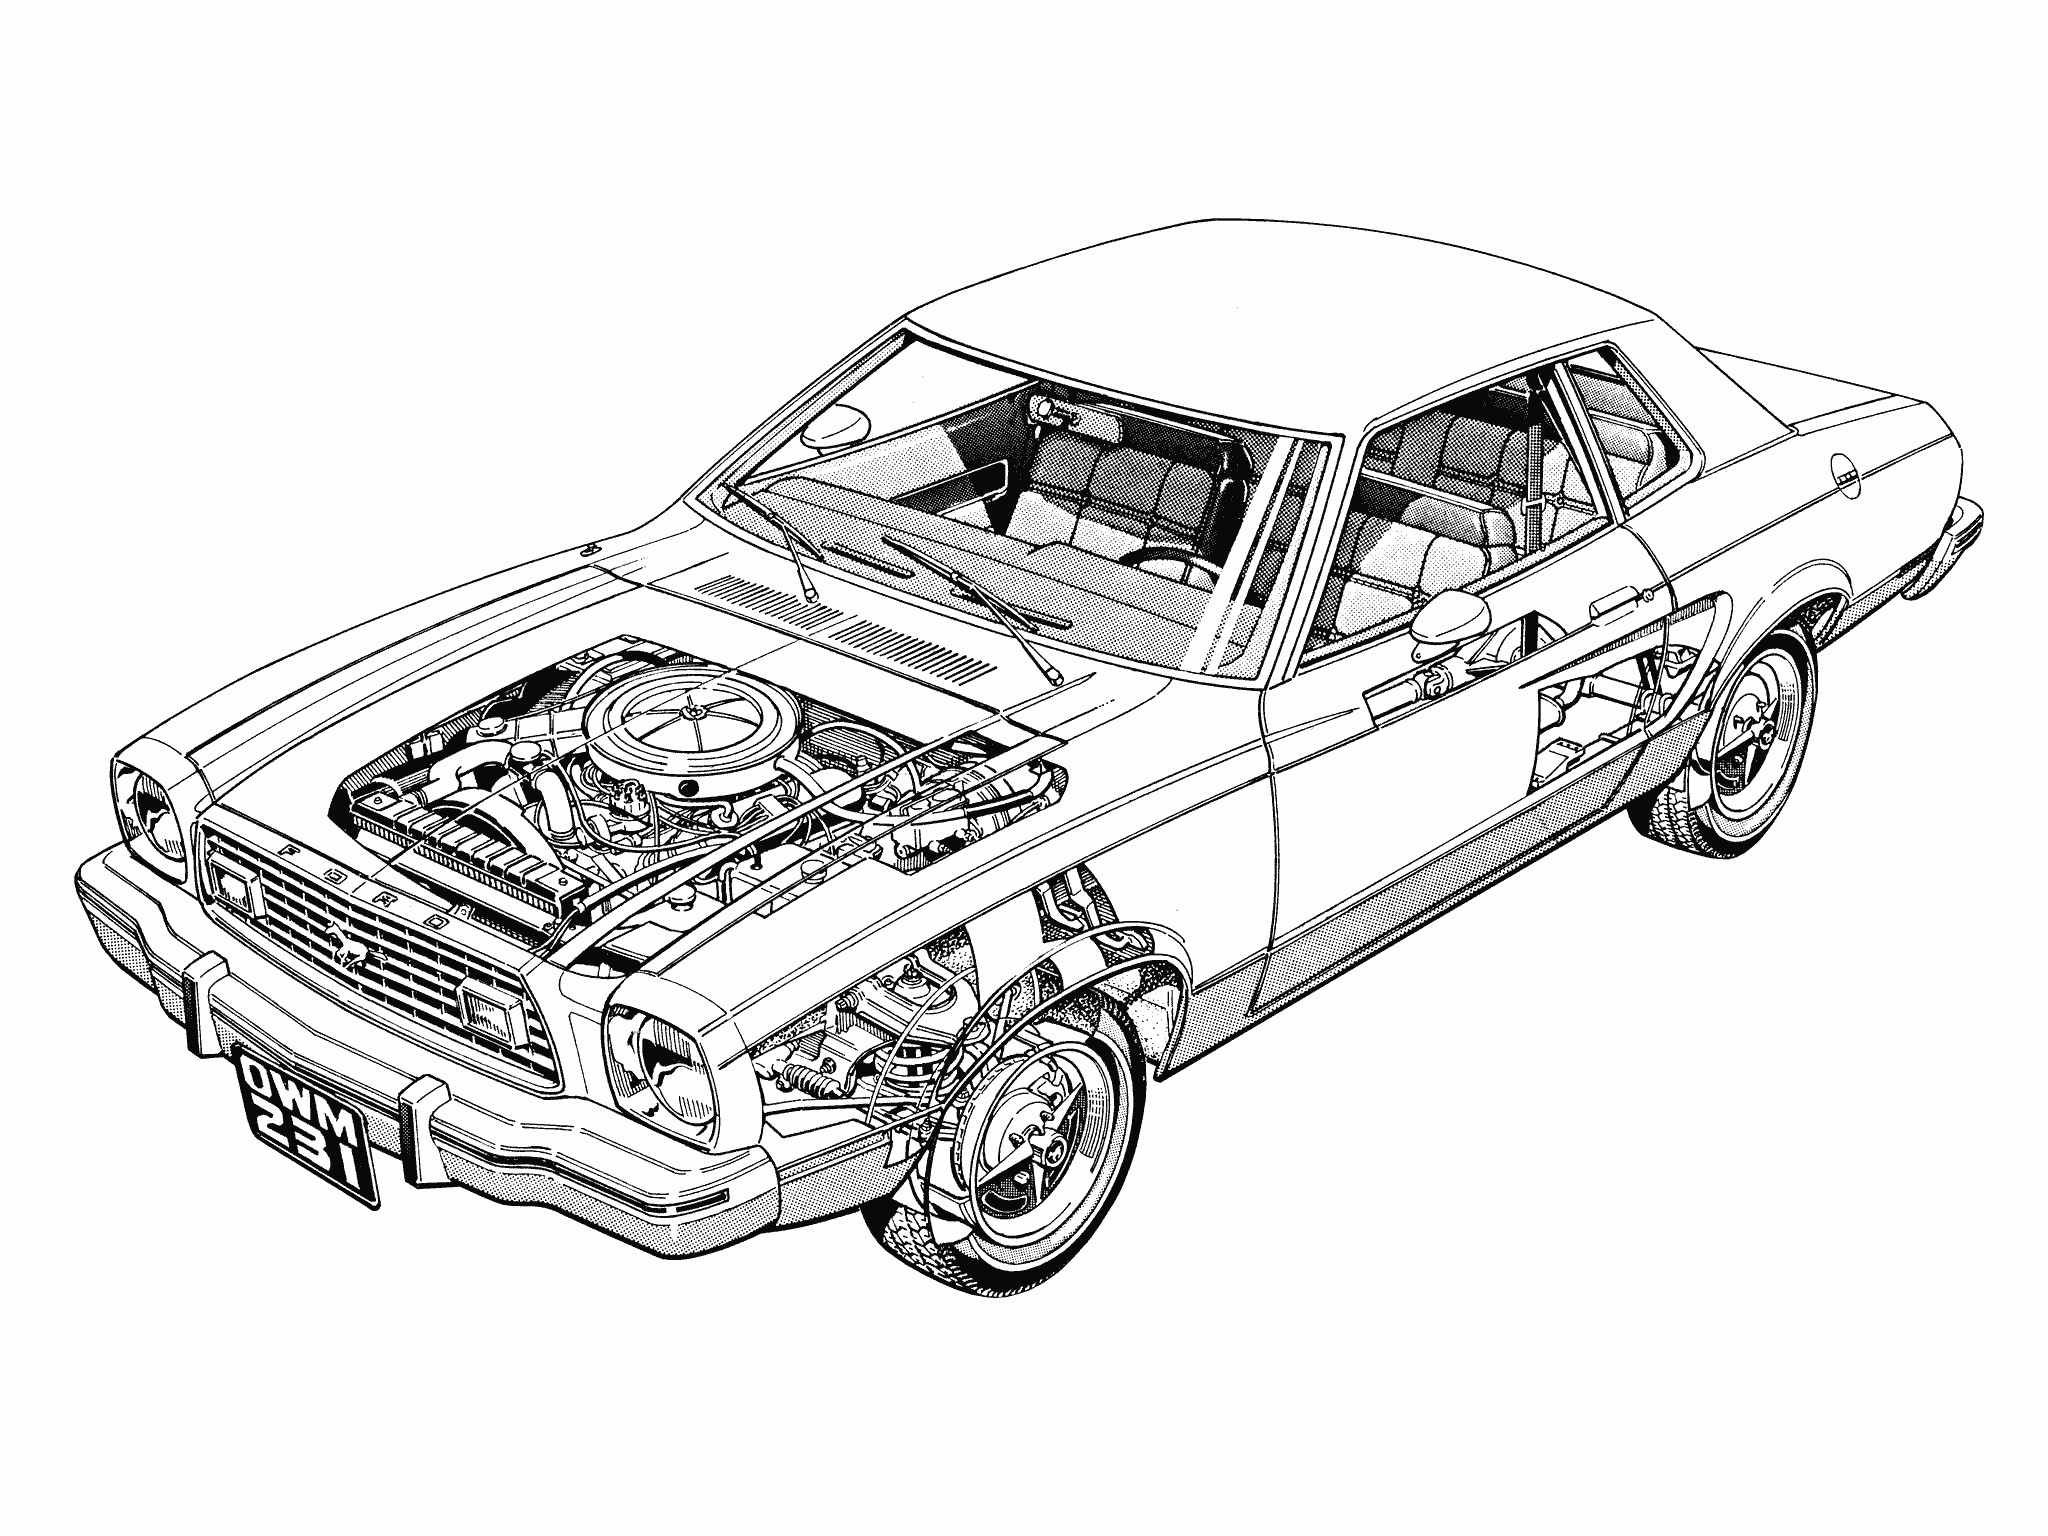 Ford Mustang cutaway